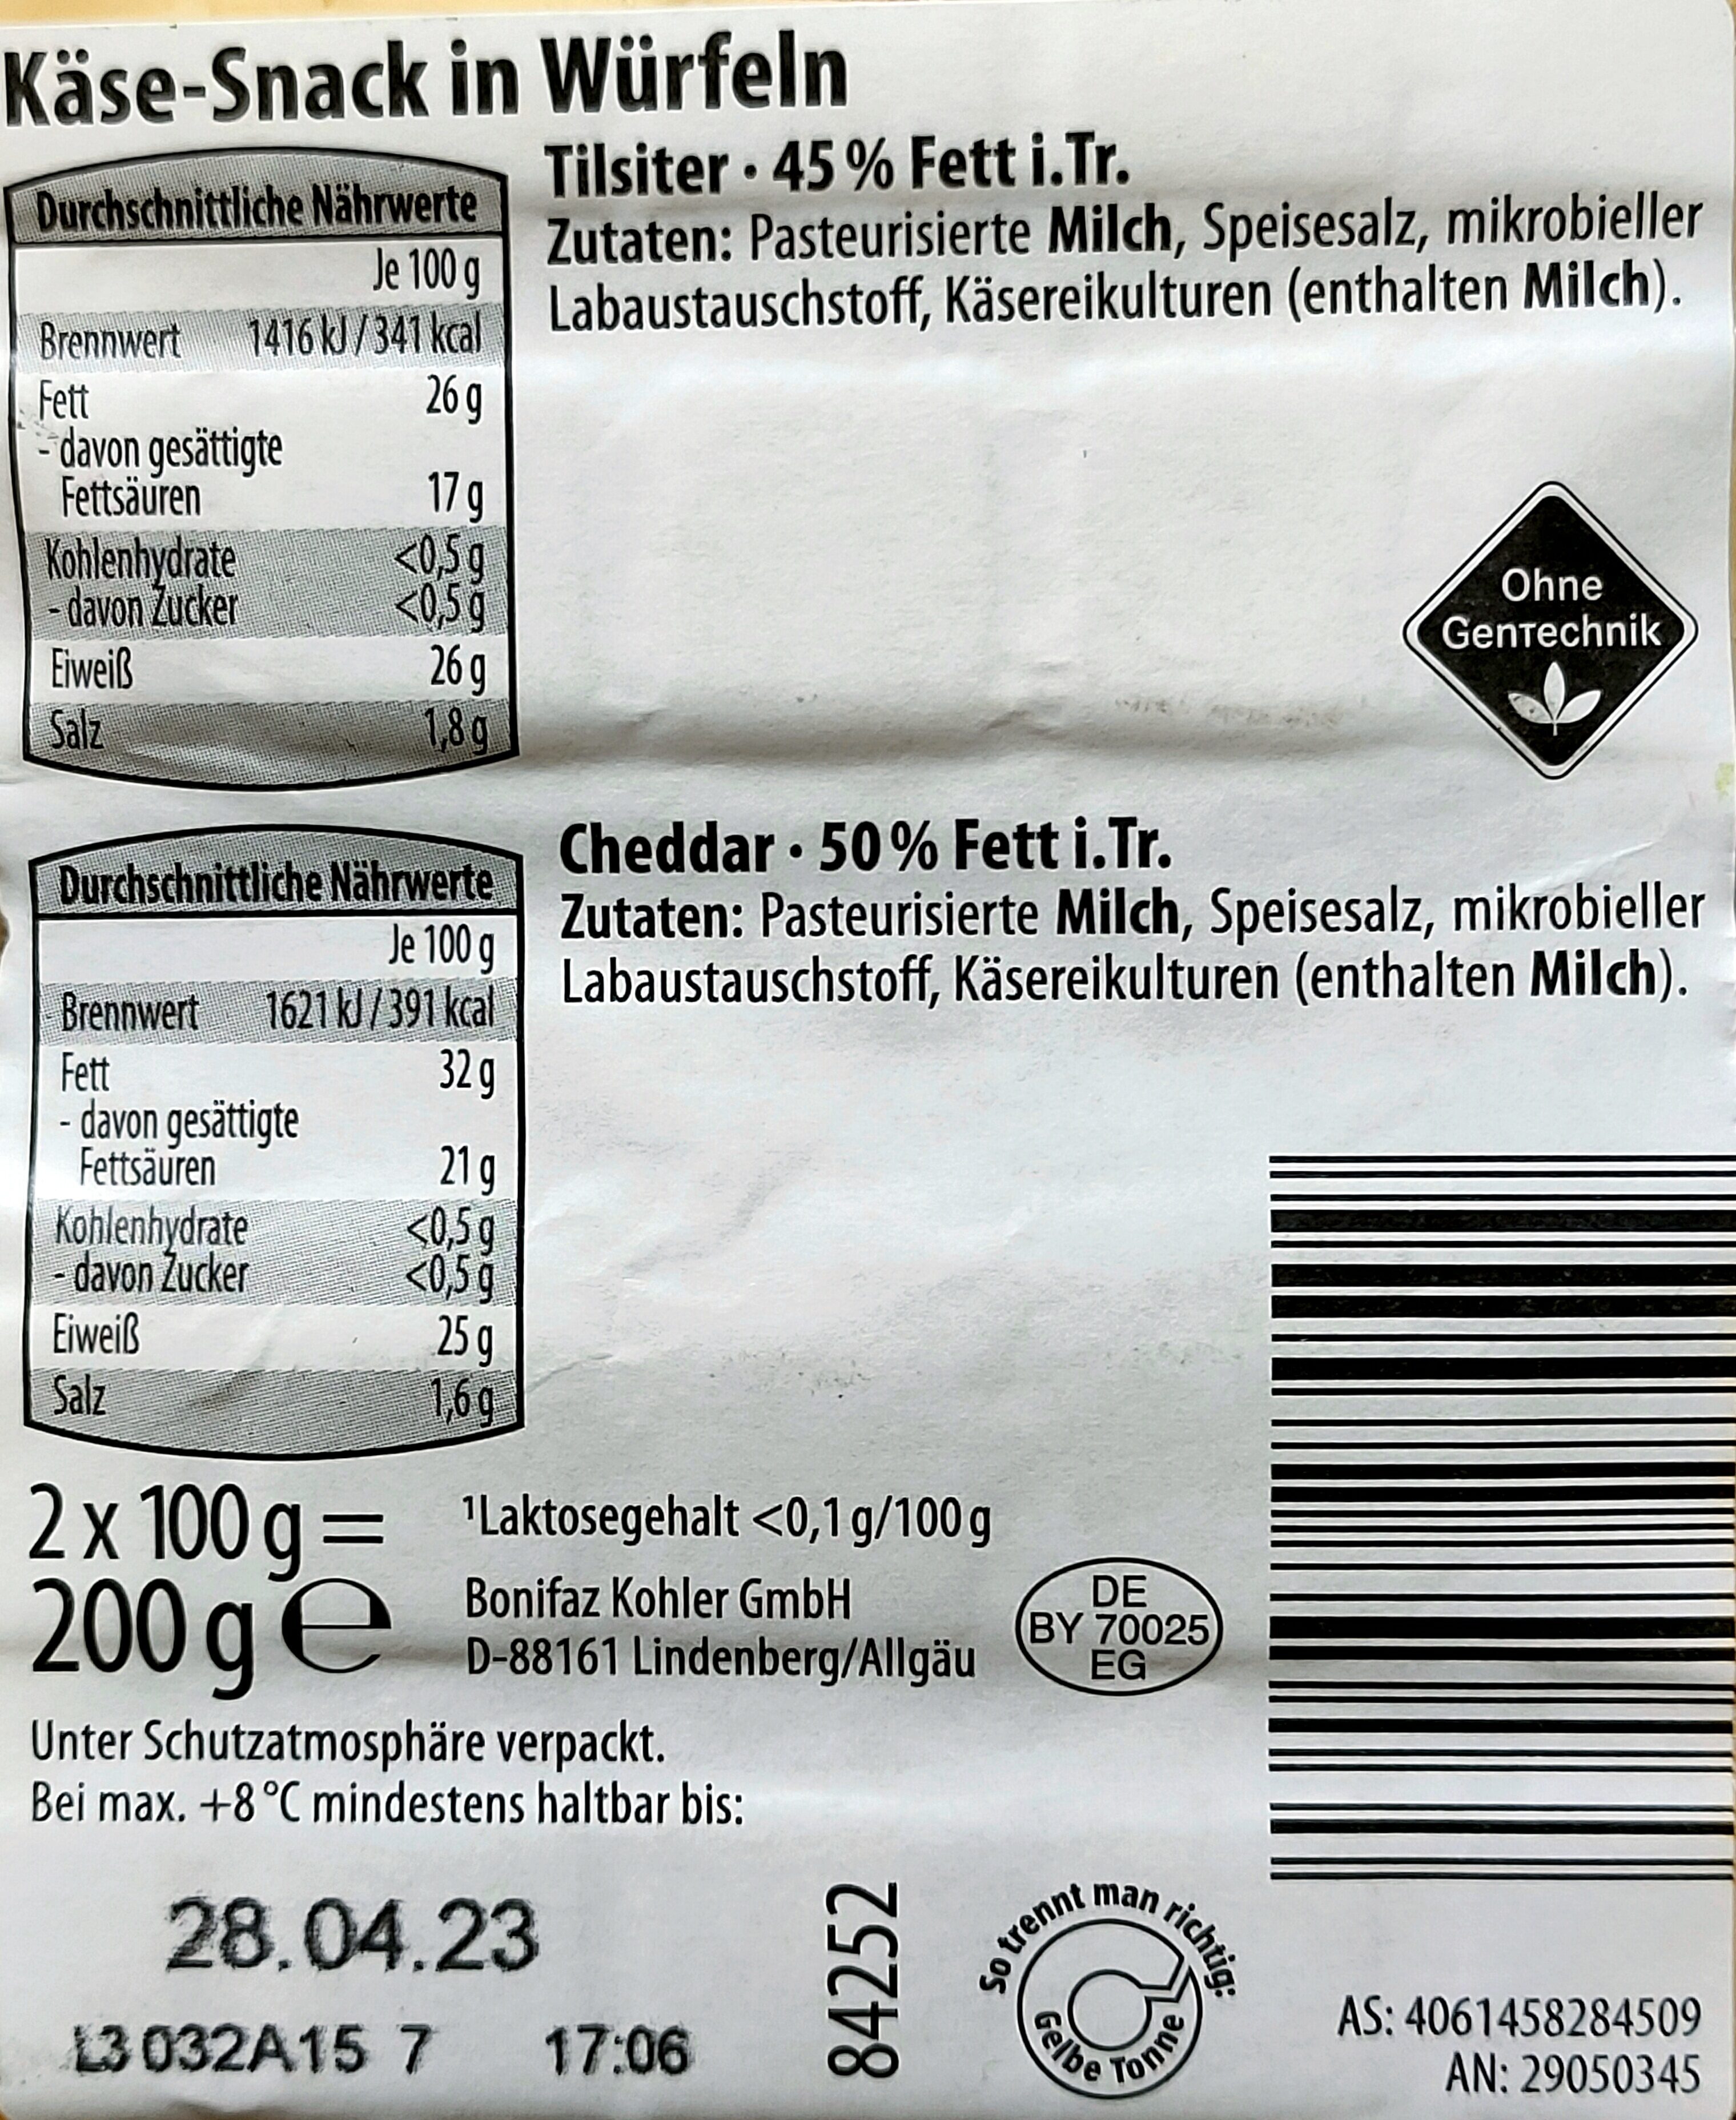 Käsesnack in Würfeln - Tilsiter & Cheddar - Zutaten